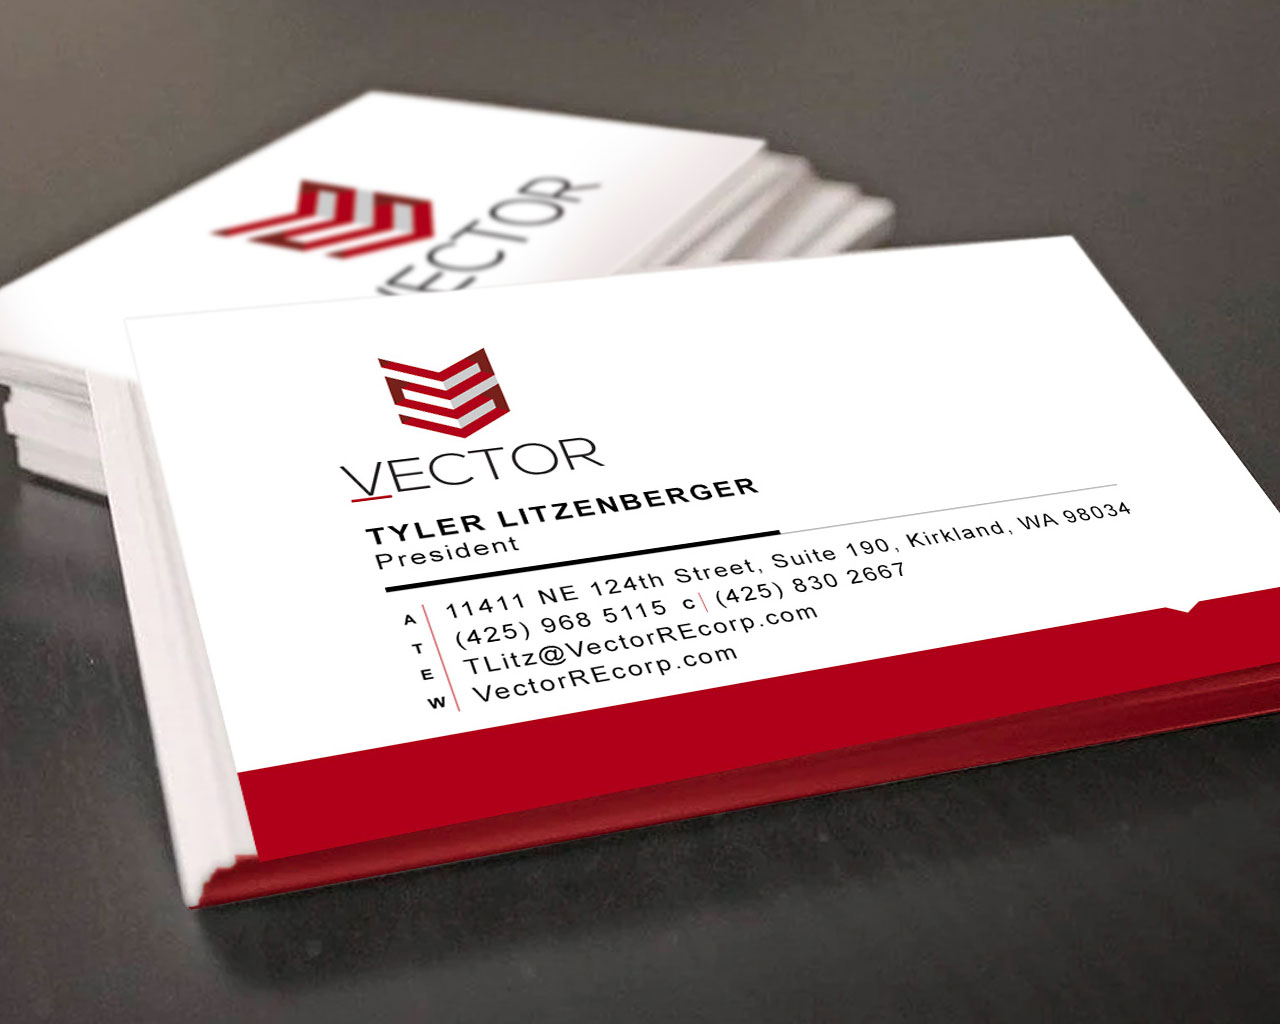 Vector Corporation